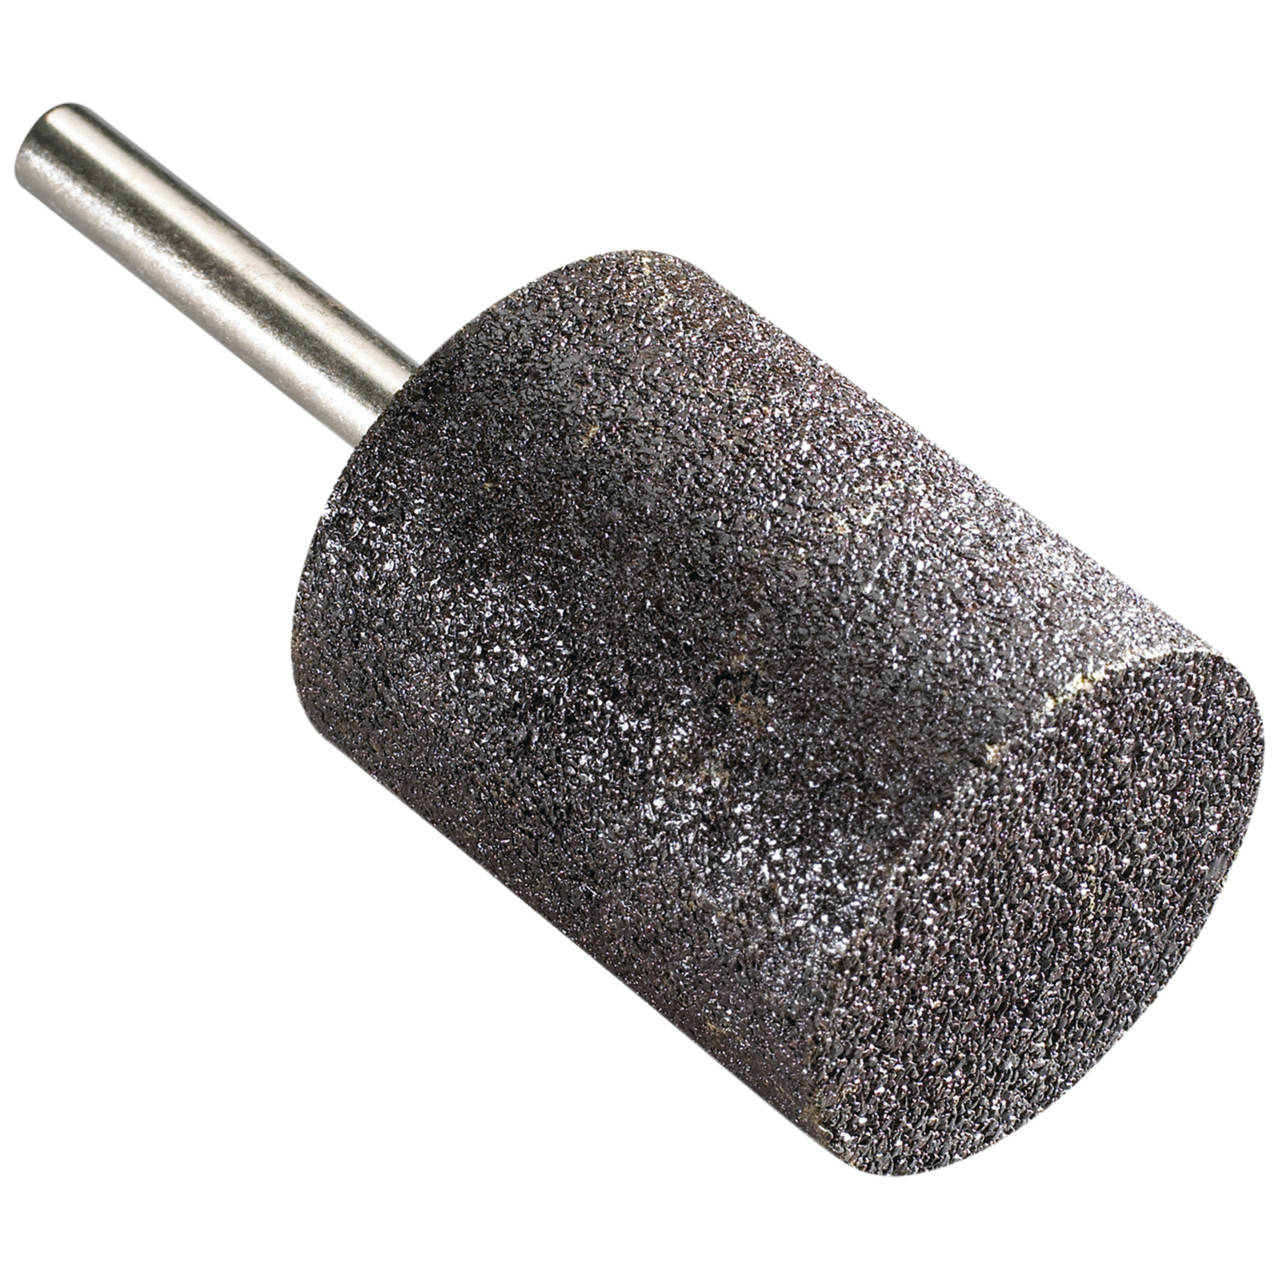 Tyrolit Punti montati in resina DxT-SxL 50x25-6x40 Per acciaio inox, forma: 52ZY - cilindro (punto montato), Art. 682112